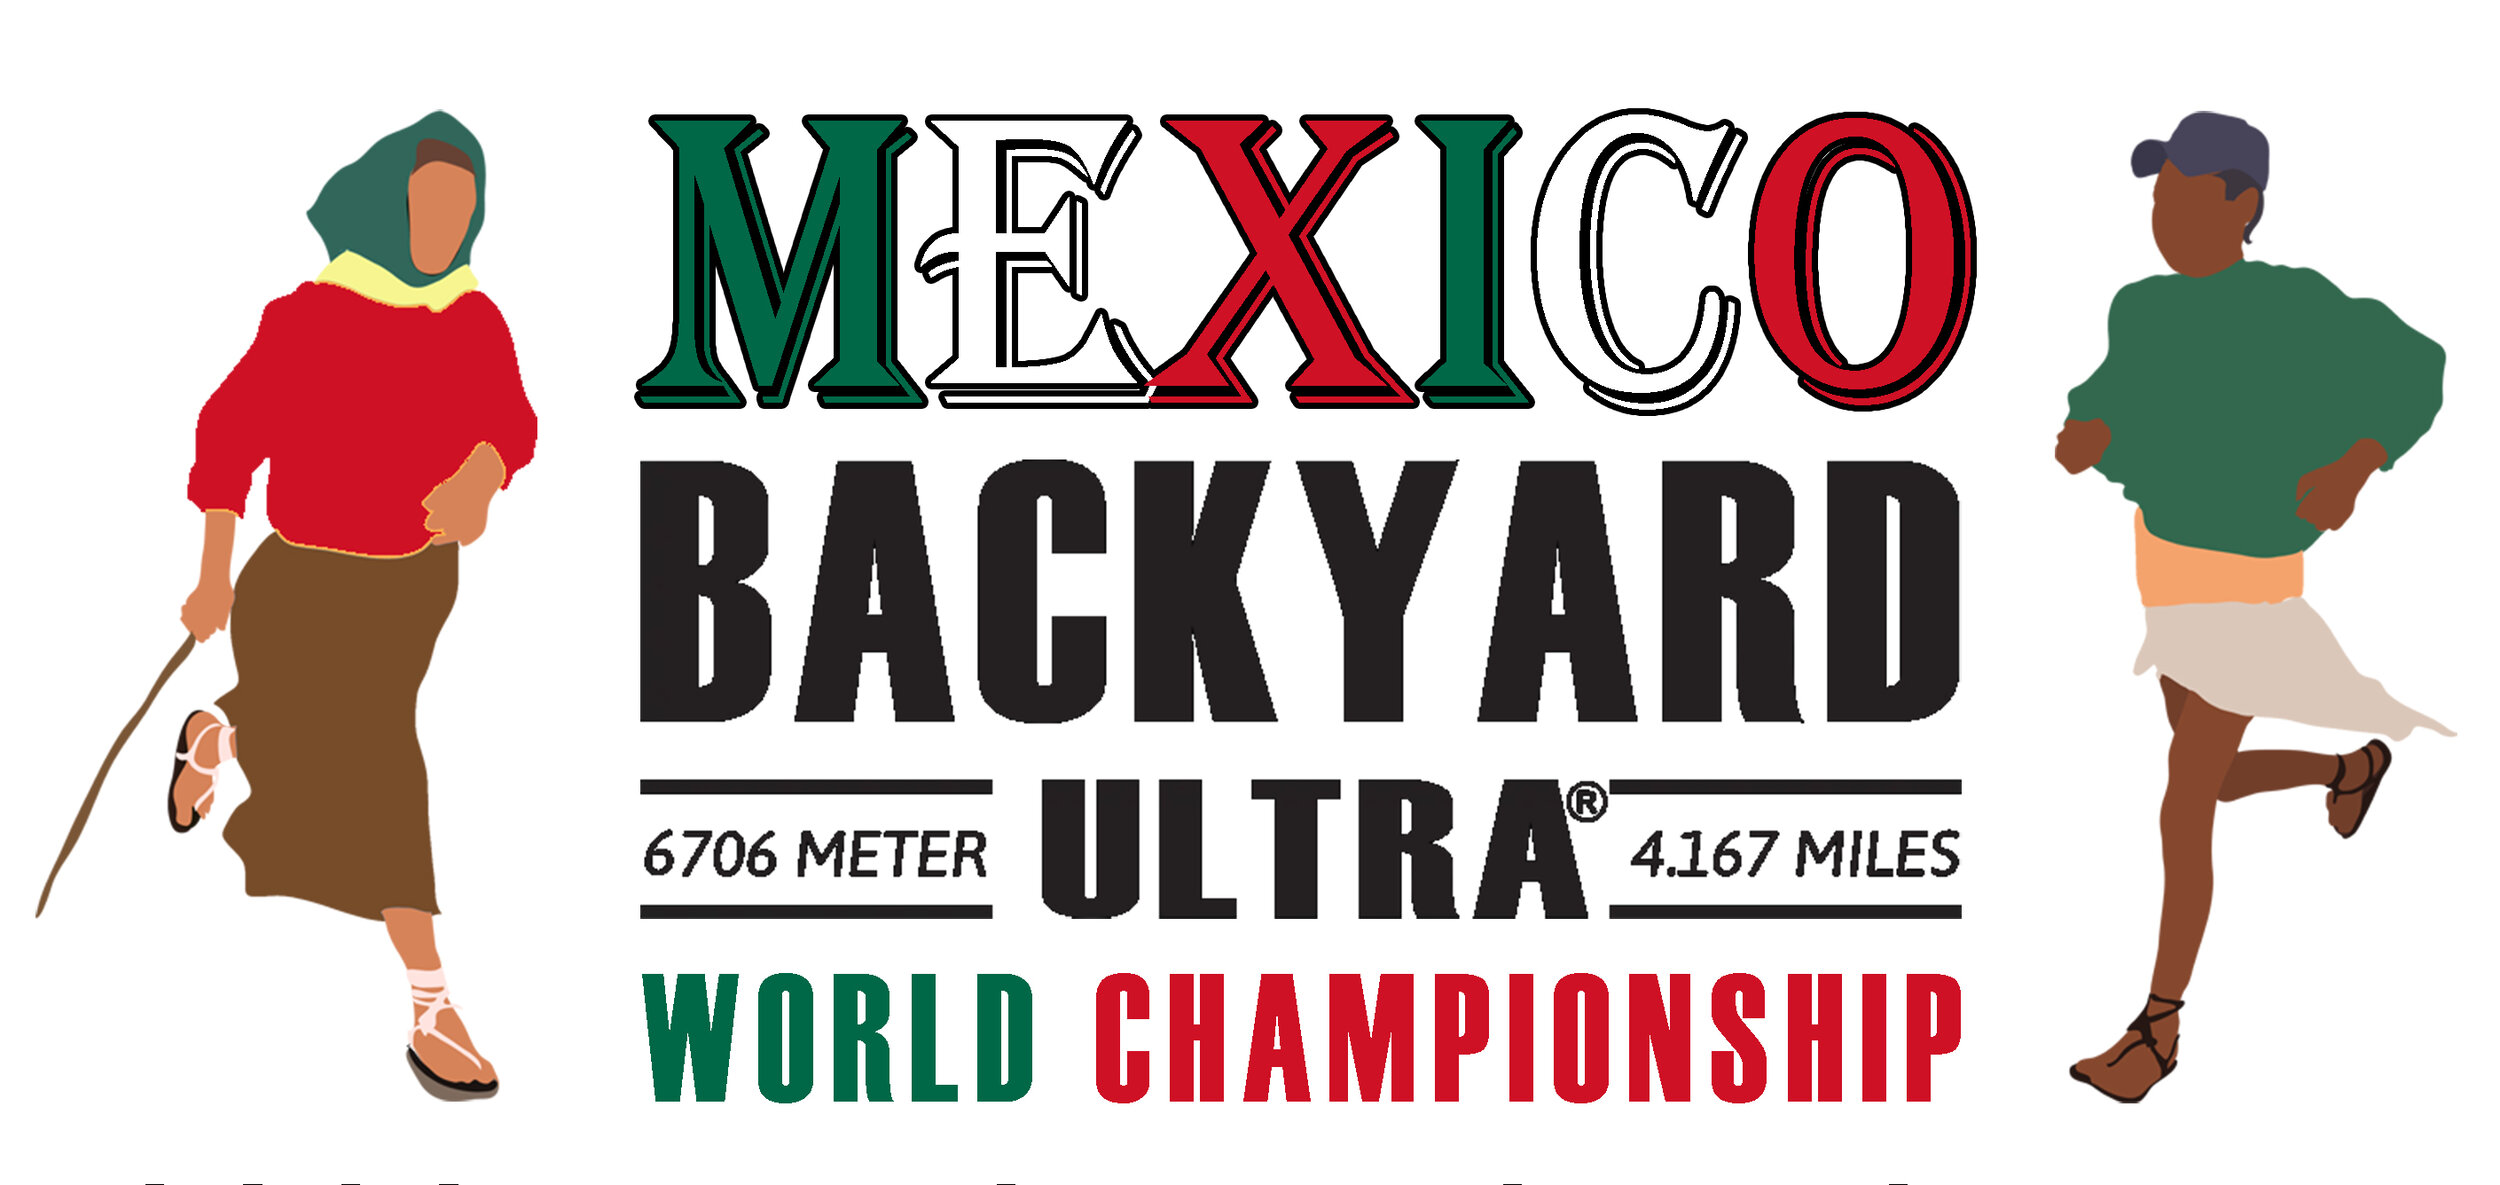 Backyard Logo Mexico small.jpg